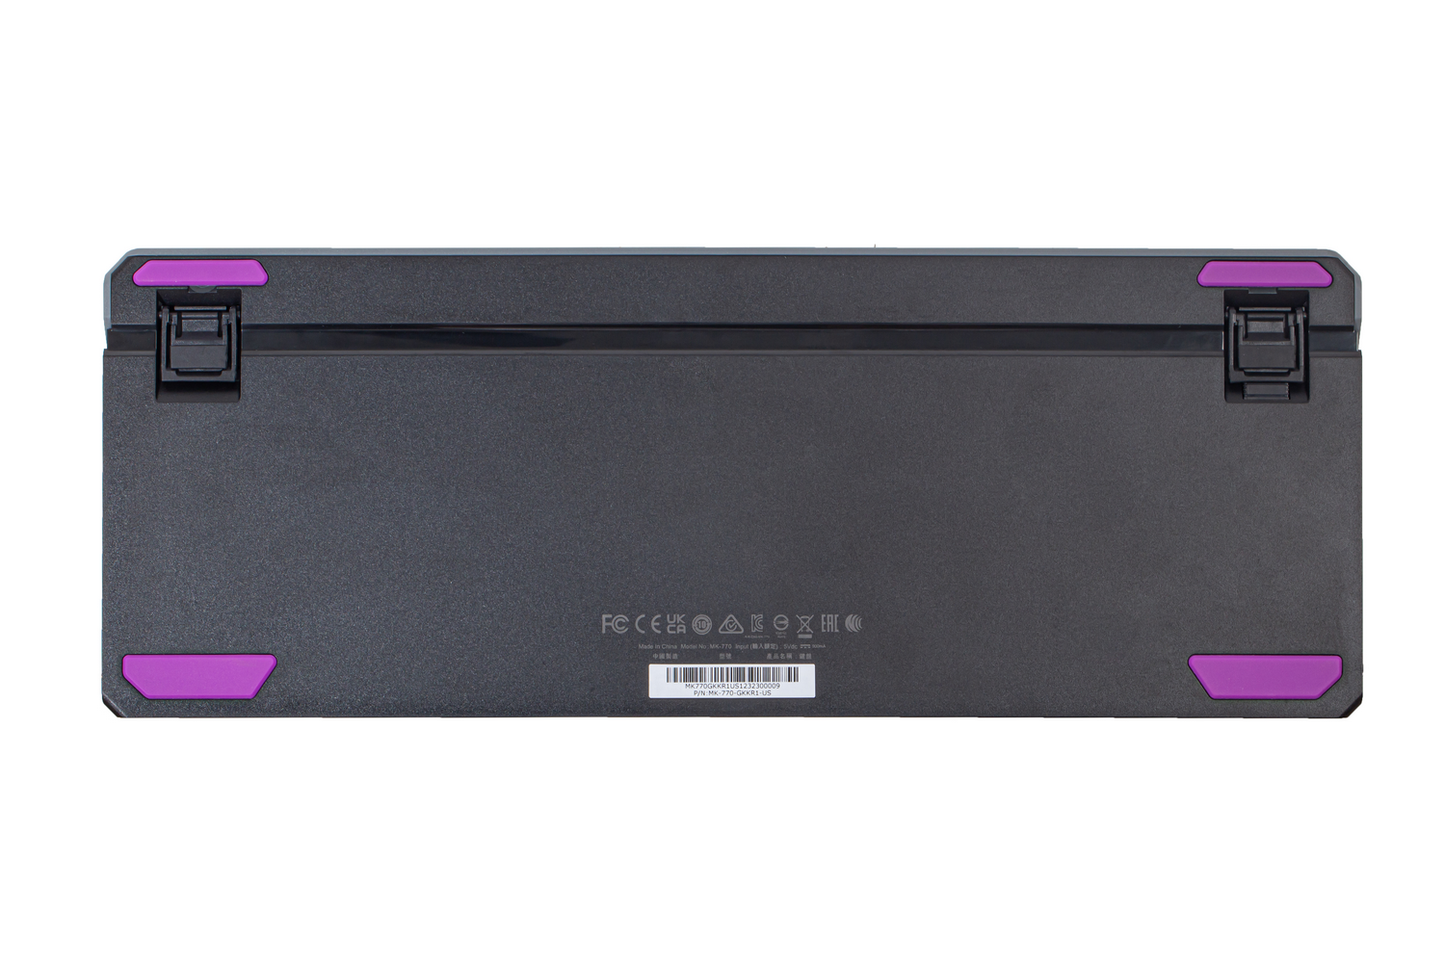 Cooler Master MK770 Space Gray Wireless Mechanical RGB Gaming Keyboard - IT Layout